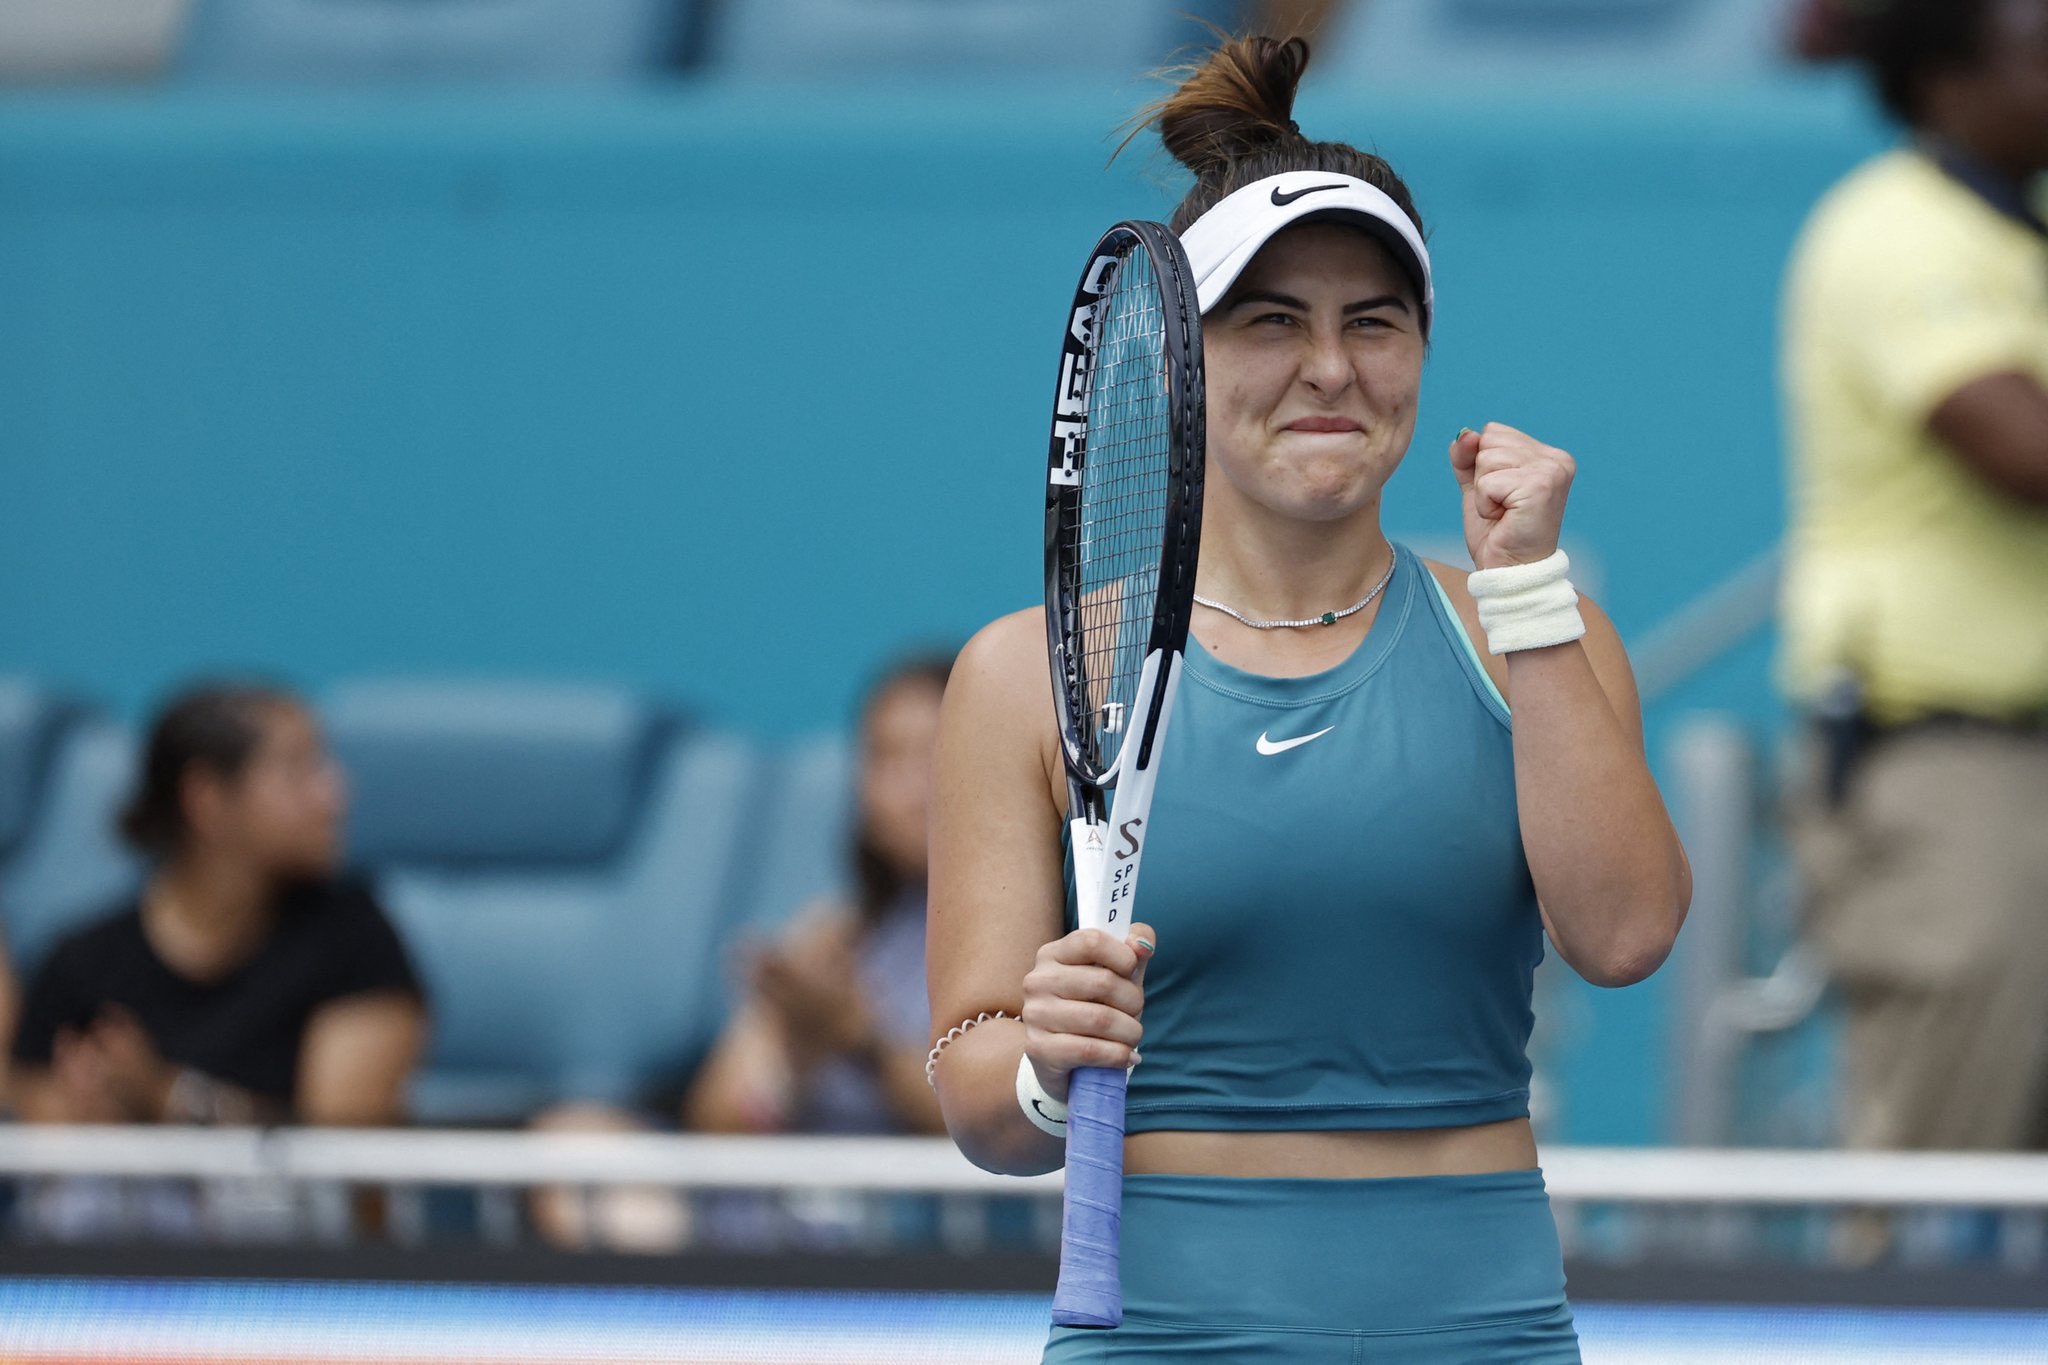 Vienna Open - Top favorites dominate in the women's quarterfinals